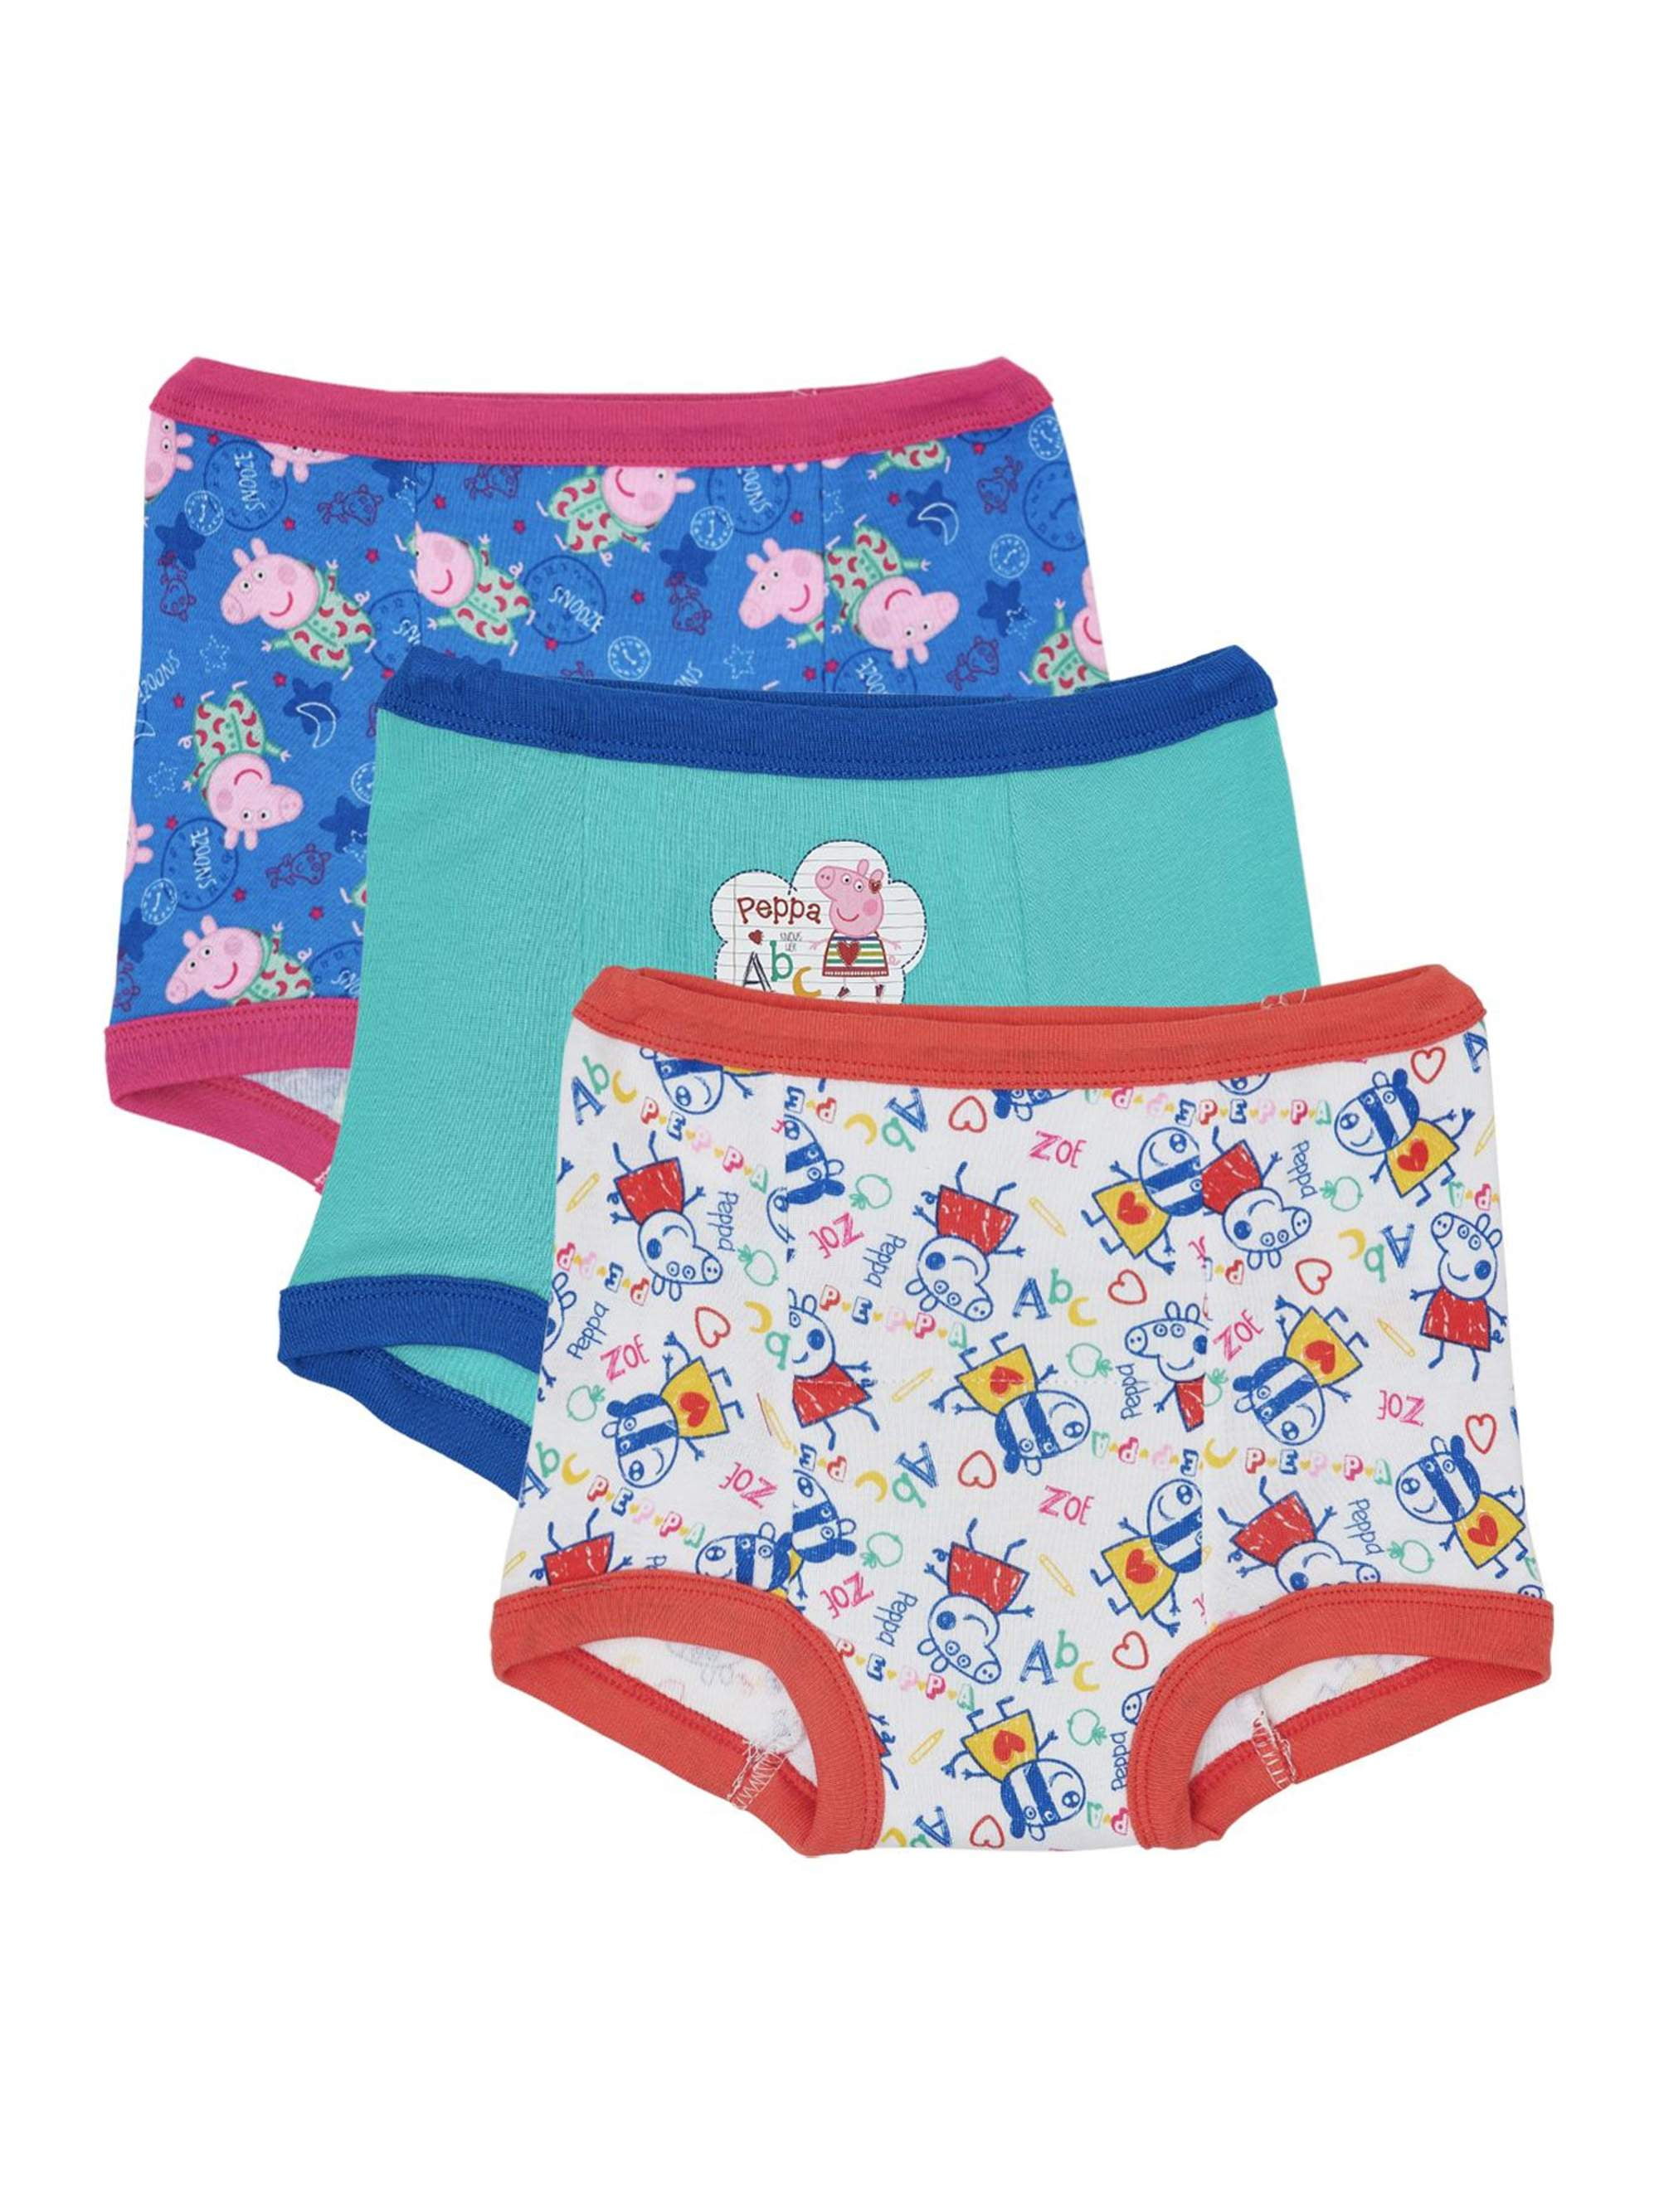 Cocomelon JJ Toddler Girls Training Pants Underwear Briefs 6 Pack